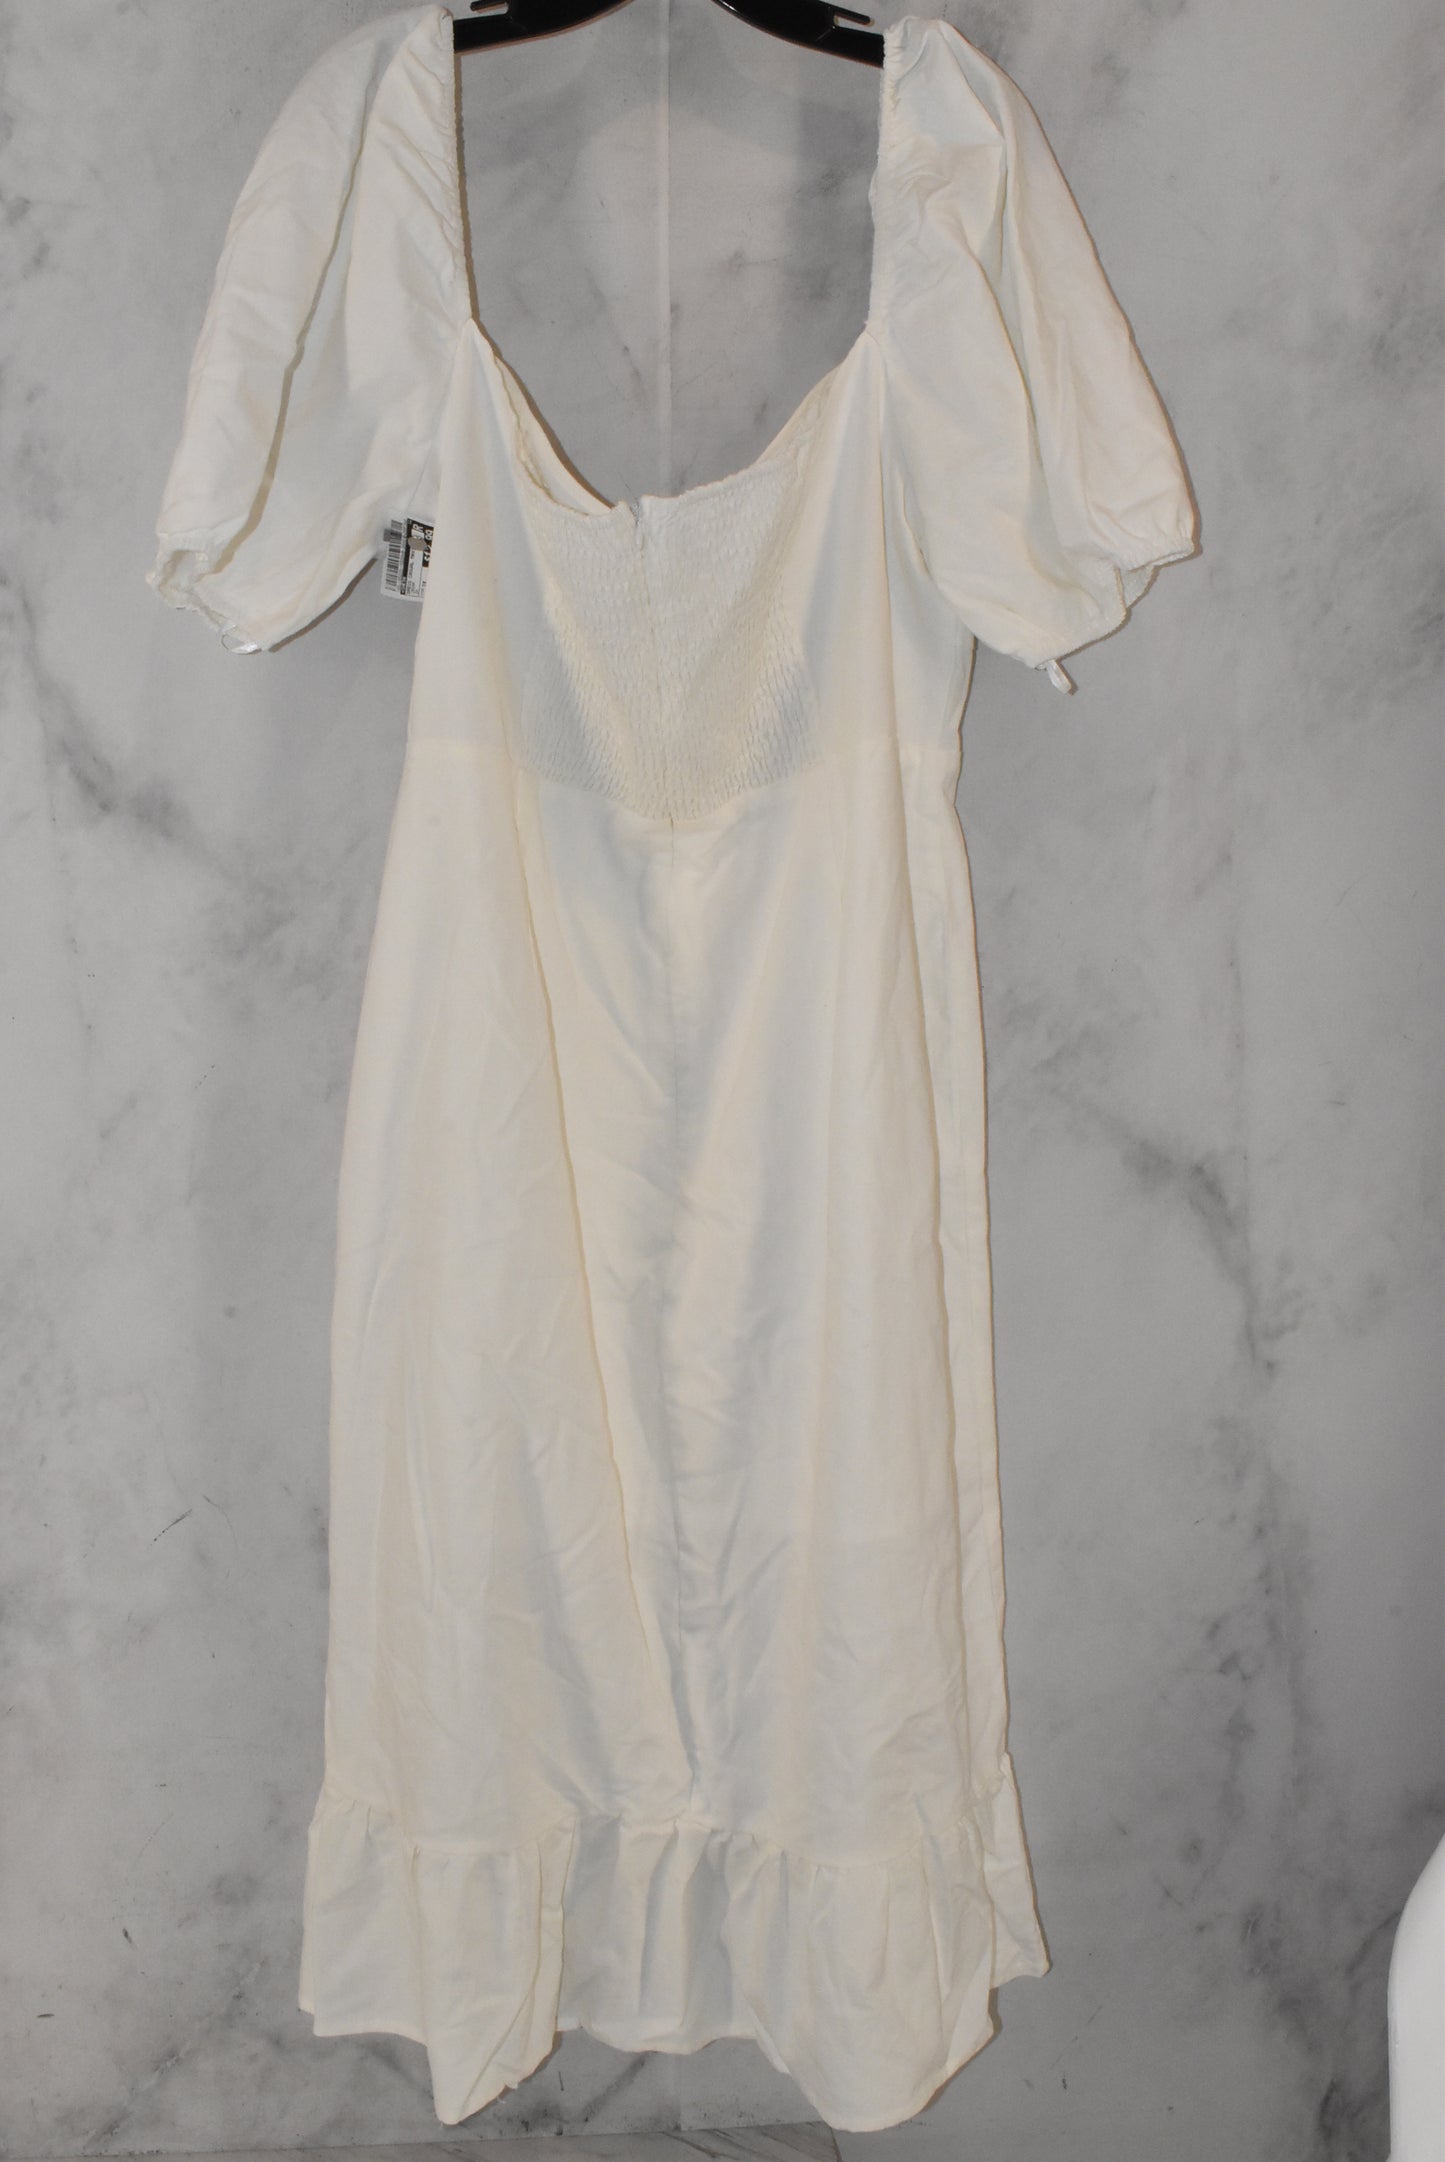 Dress Casual Maxi By Shein  Size: 3x